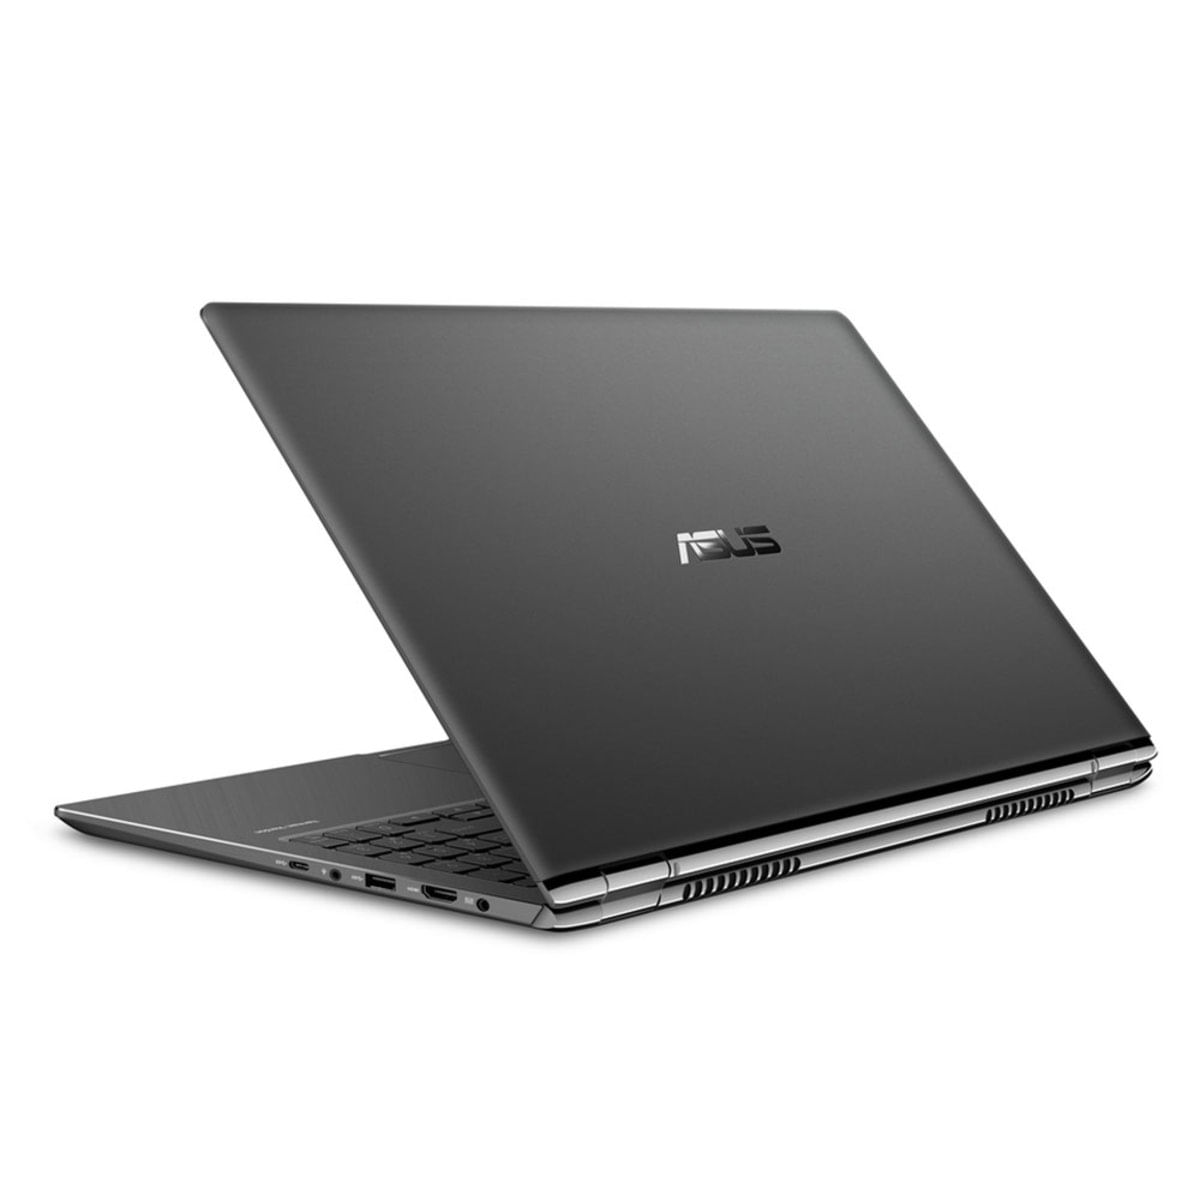 Ultrabook - Asus Q326fa I7-8565u 1.80ghz 16gb 250gb Padrão Intel Hd Graphics Windows 10 Home Zenbook 13" Polegadas